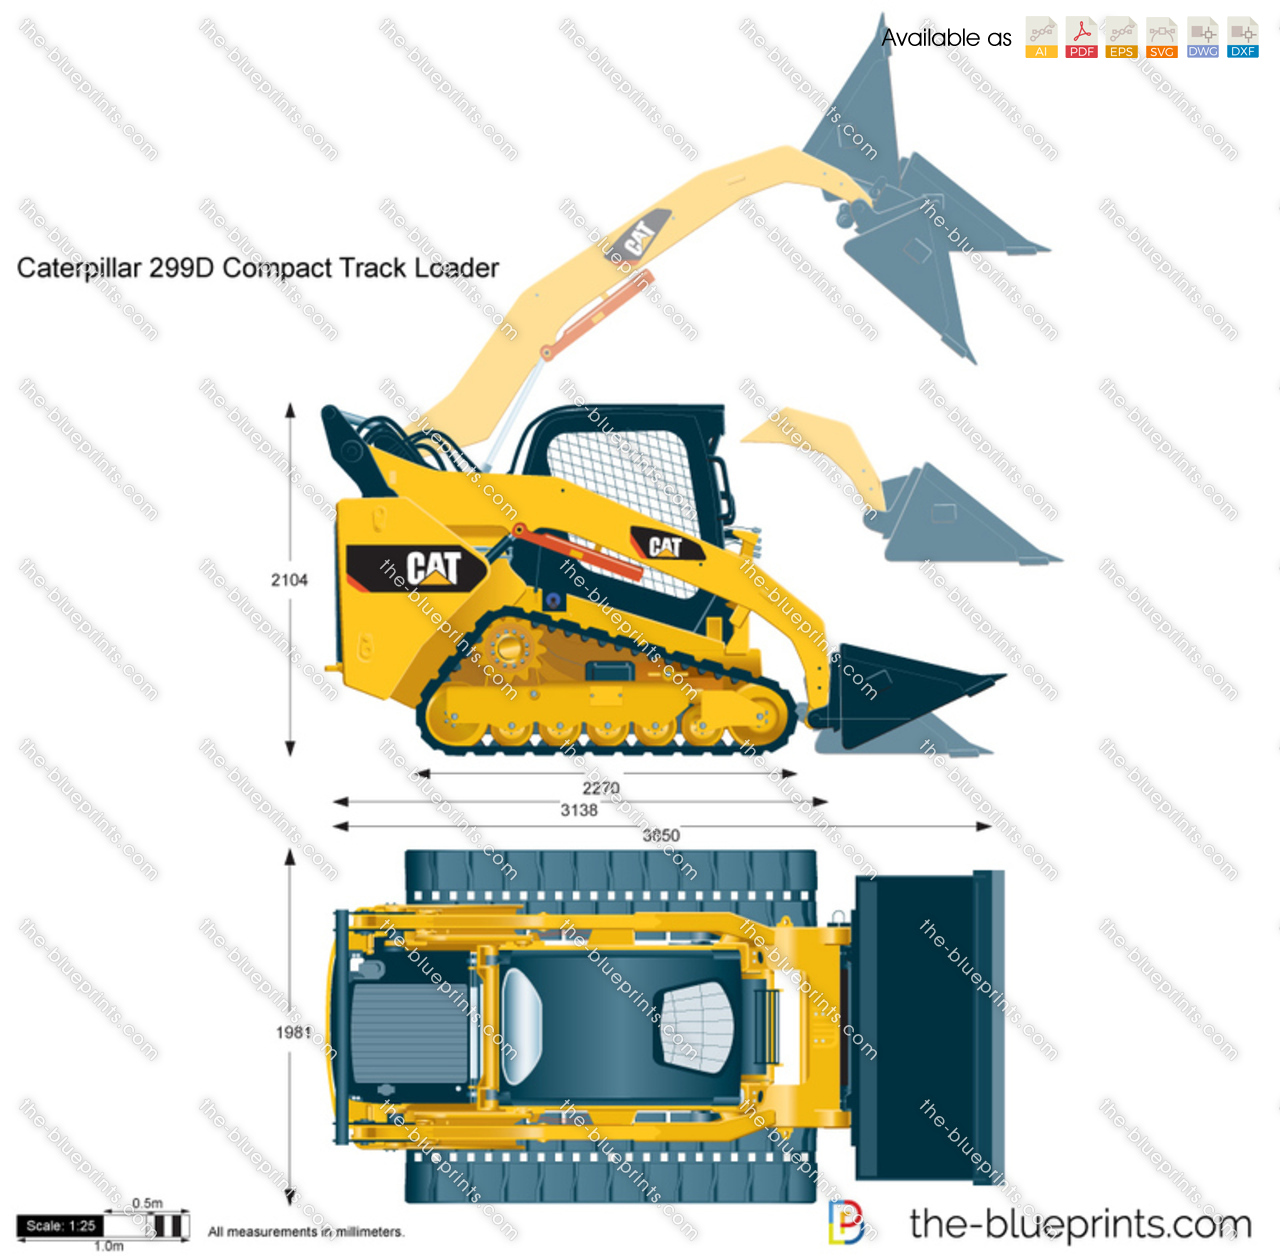 Caterpillar 299D Compact Track Loader